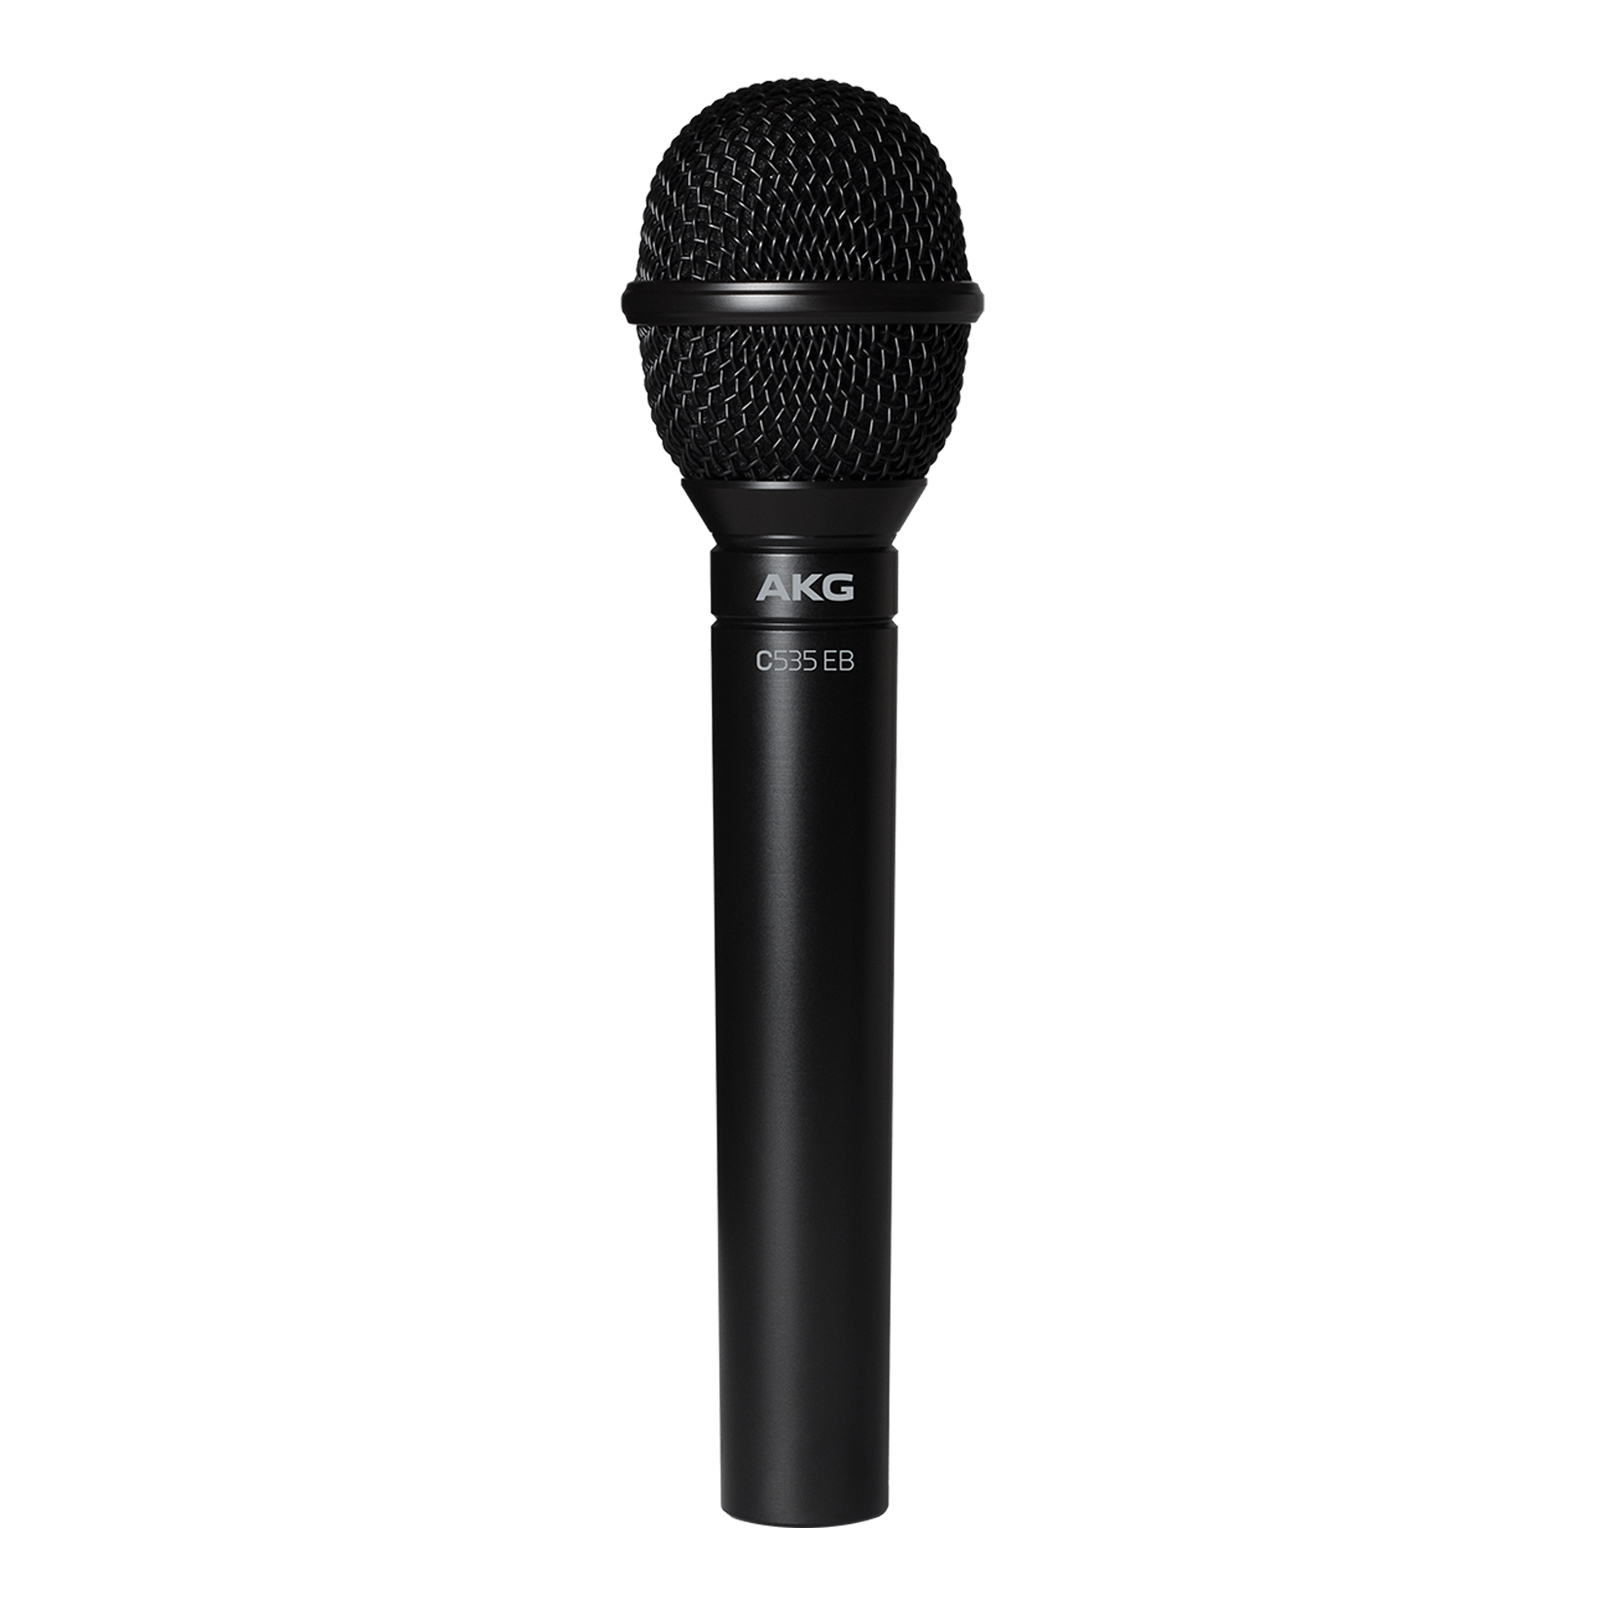 C535 EB - Black - Reference condenser vocal microphone - Hero